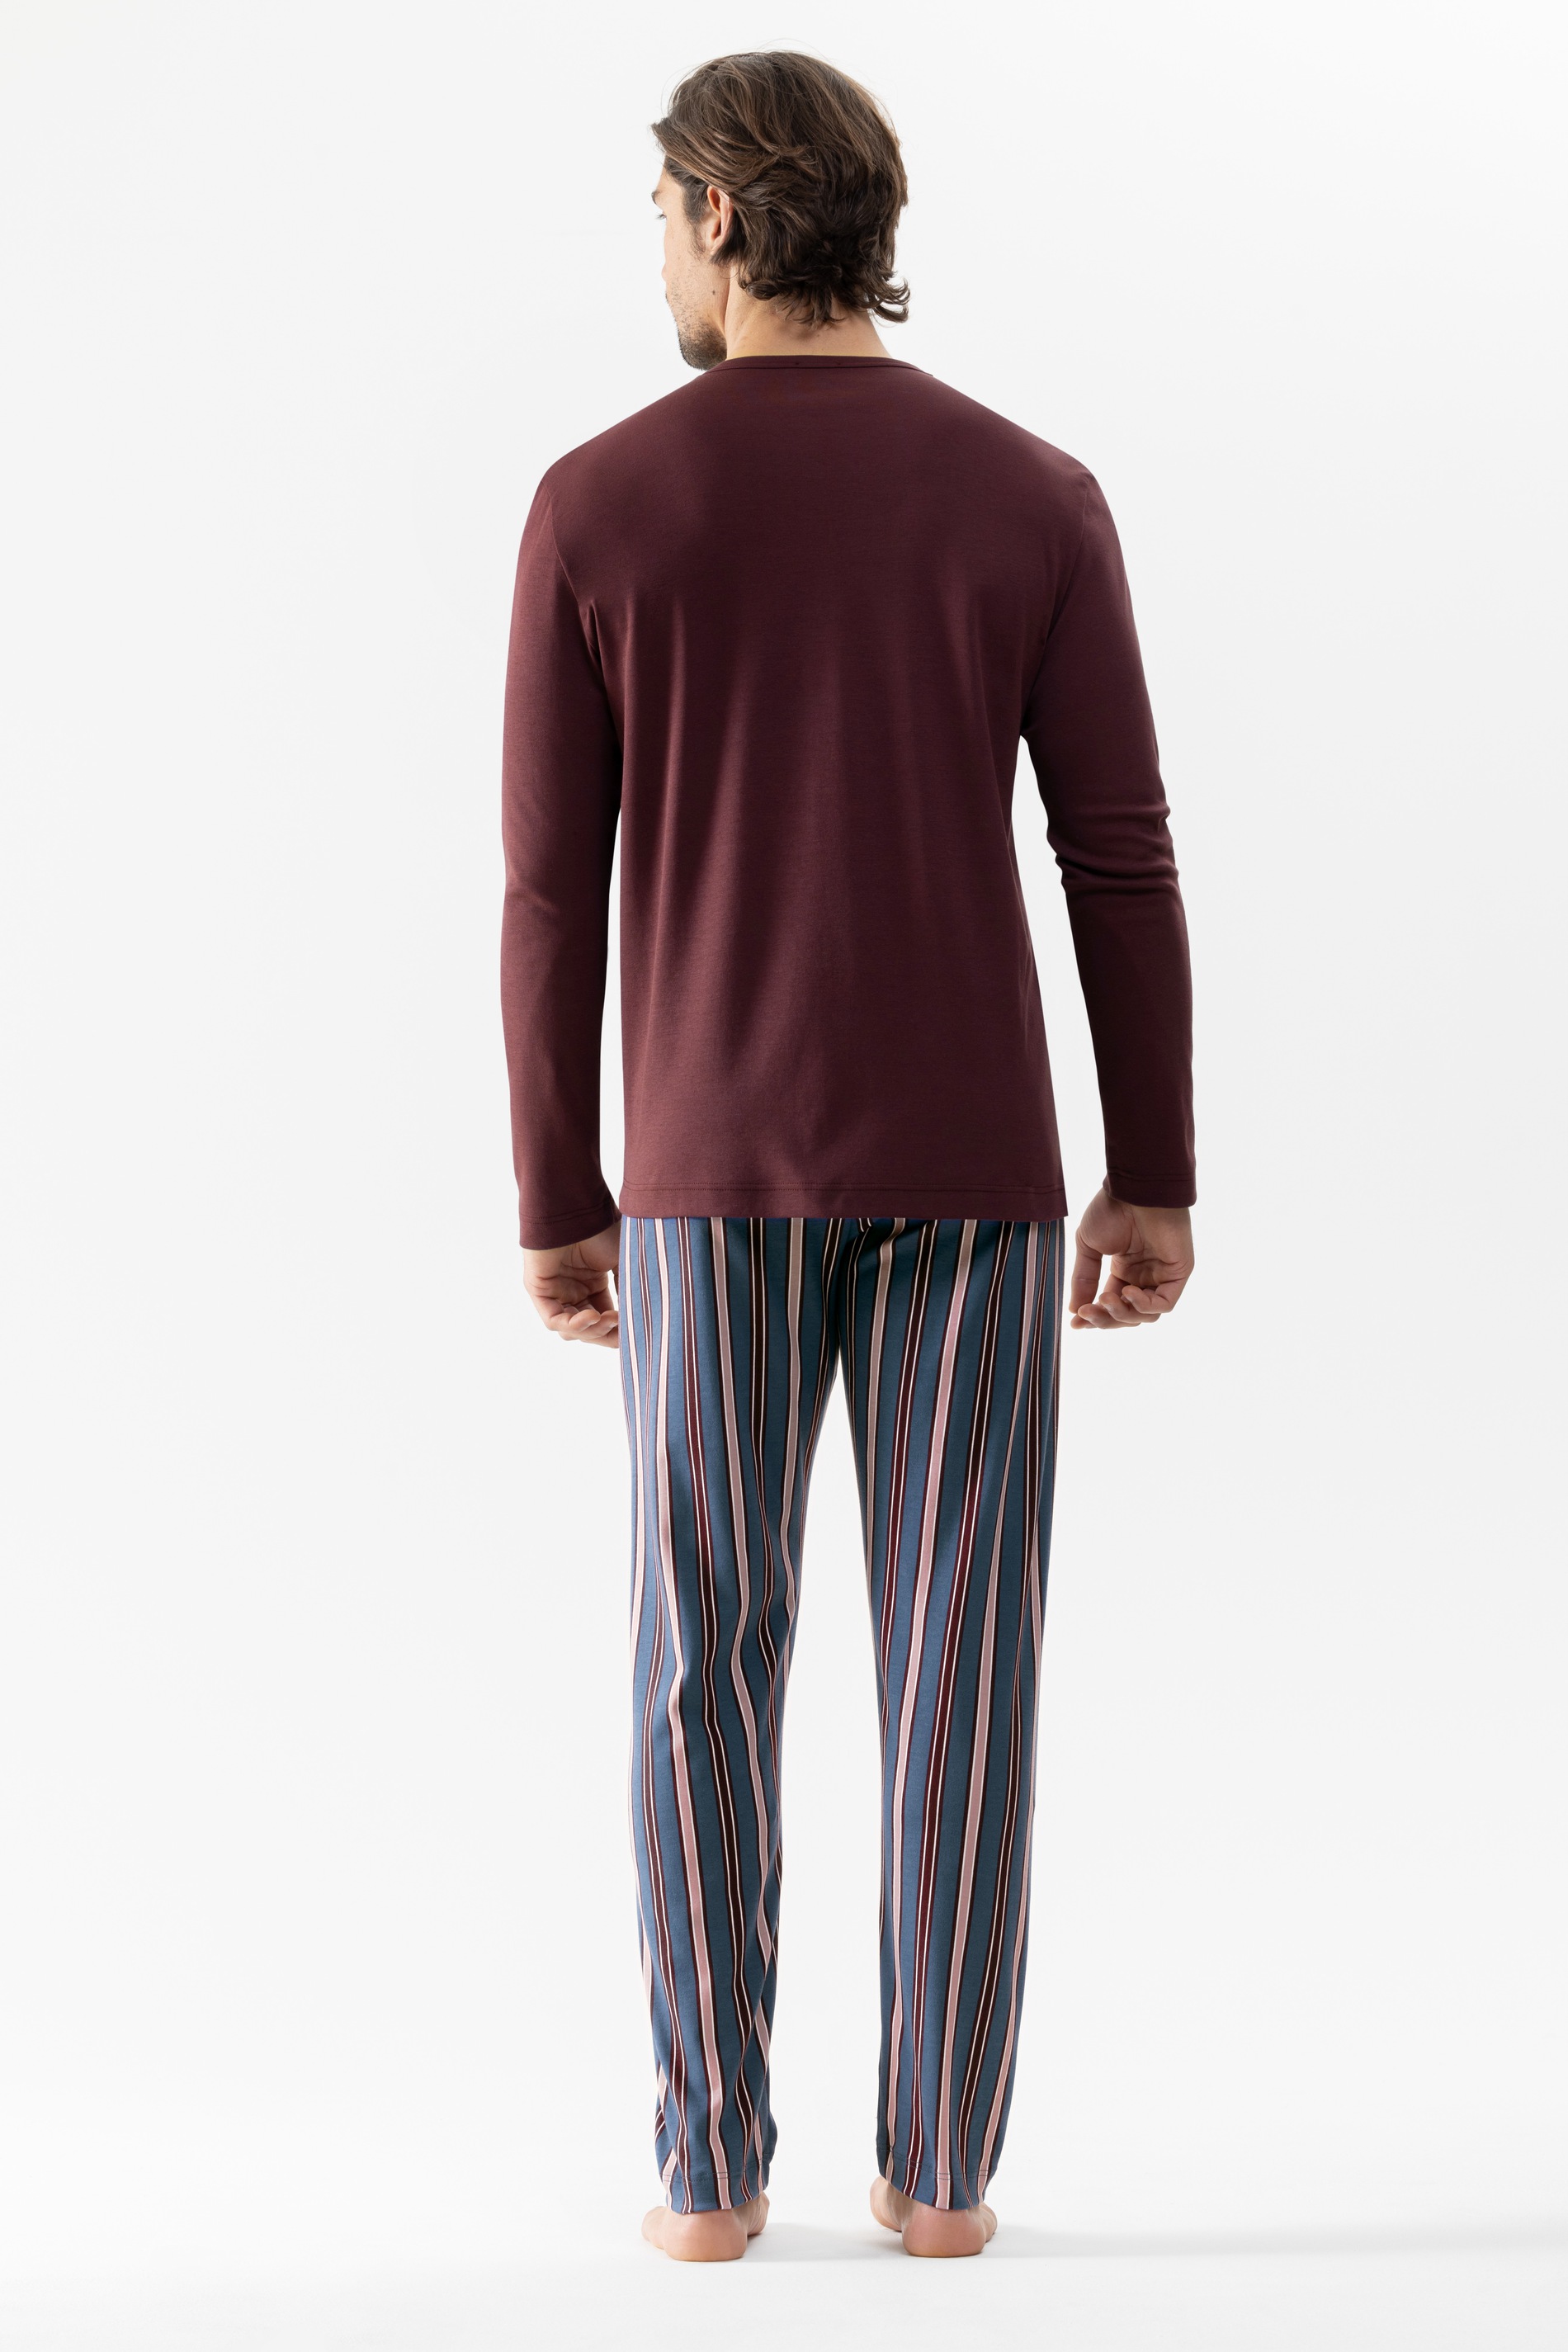 Pyjamas Serie 4 Col Striped Rear View | mey®